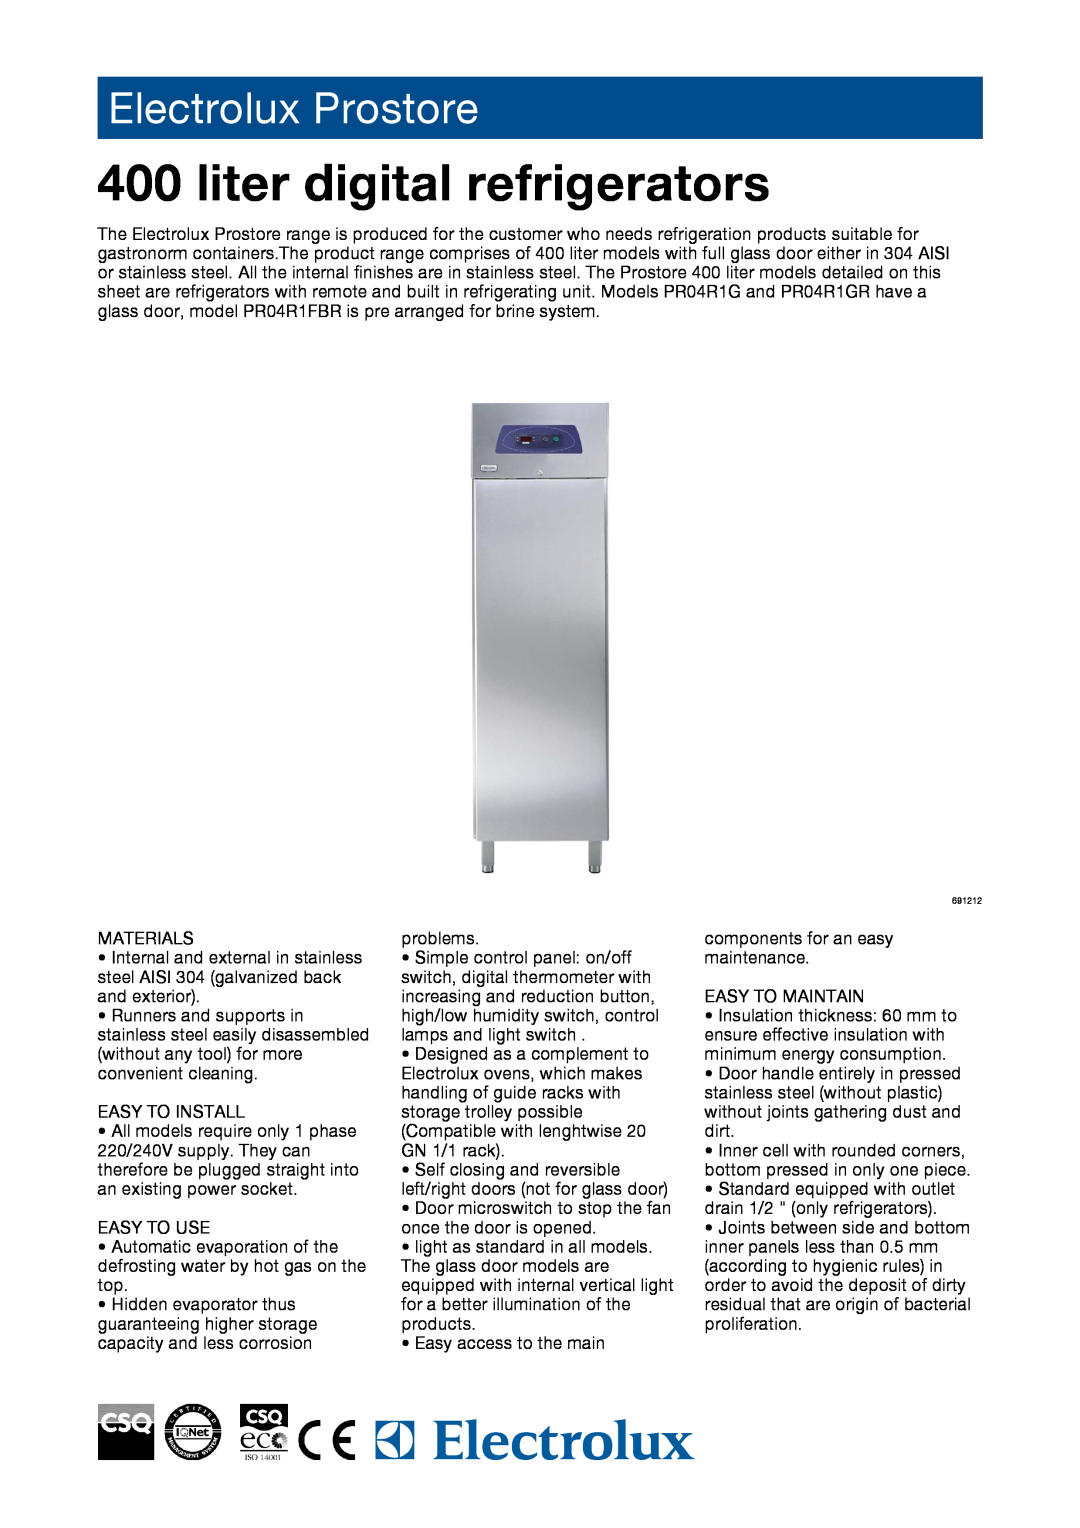 Electrolux 691215, 691213, 691123, 691212, 691214, 691216, PR04R1G manual liter digital refrigerators, Electrolux Prostore 